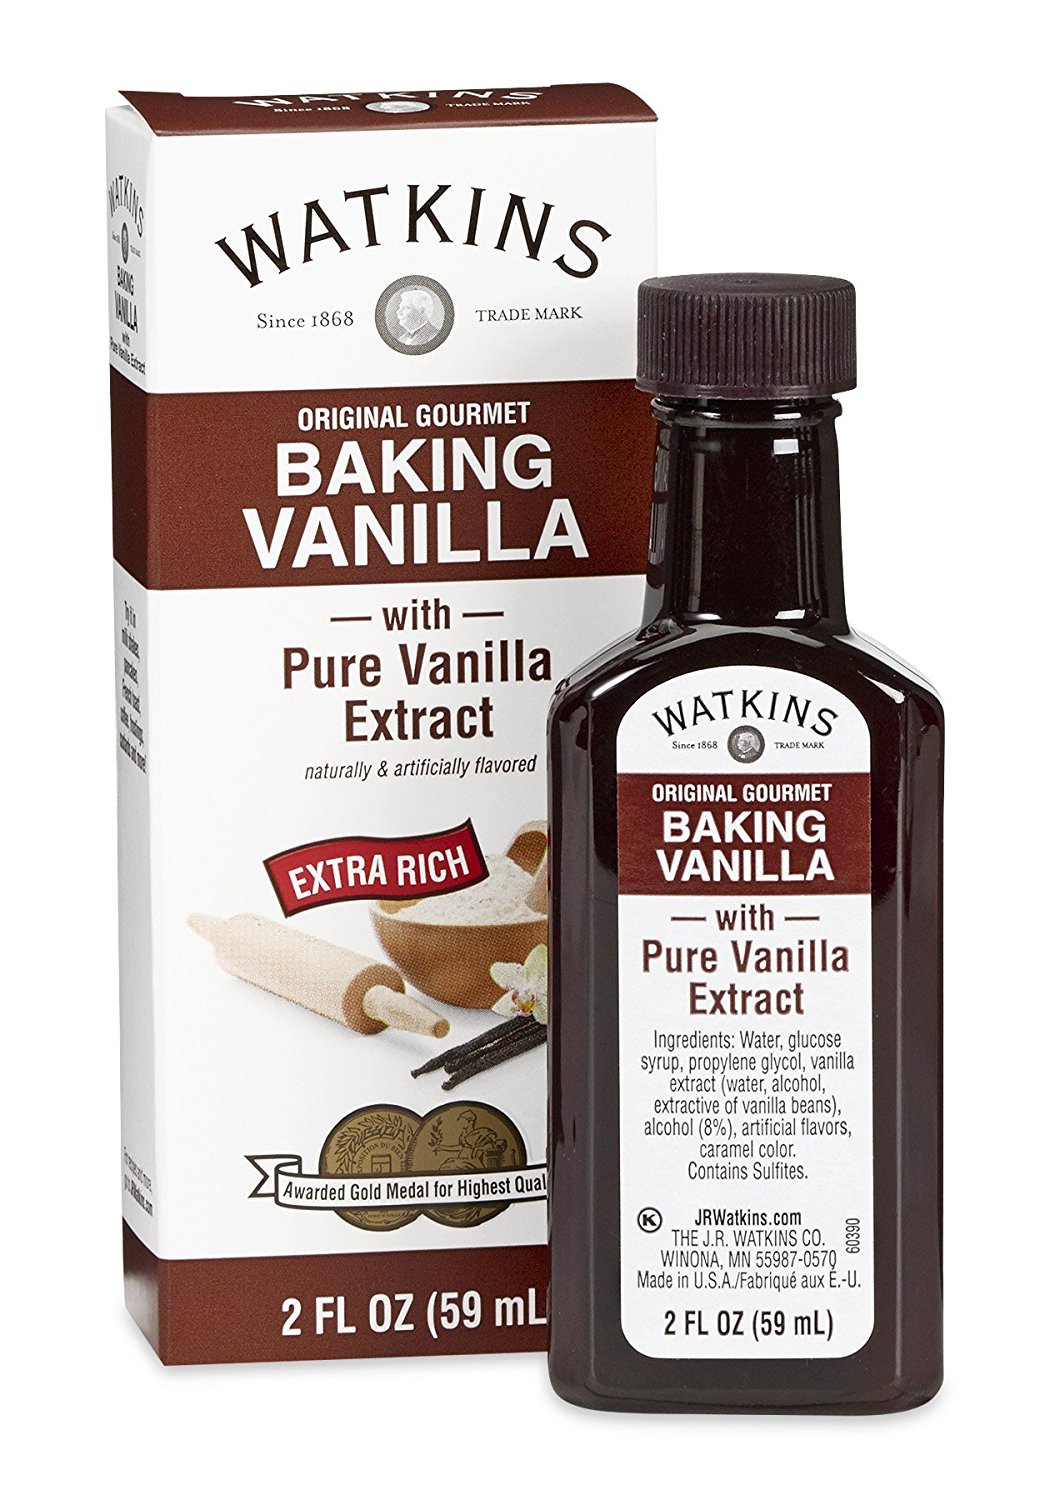 http://buildingourrez.com/wp-content/uploads/2018/08/watkins-baking-vanilla.jpg